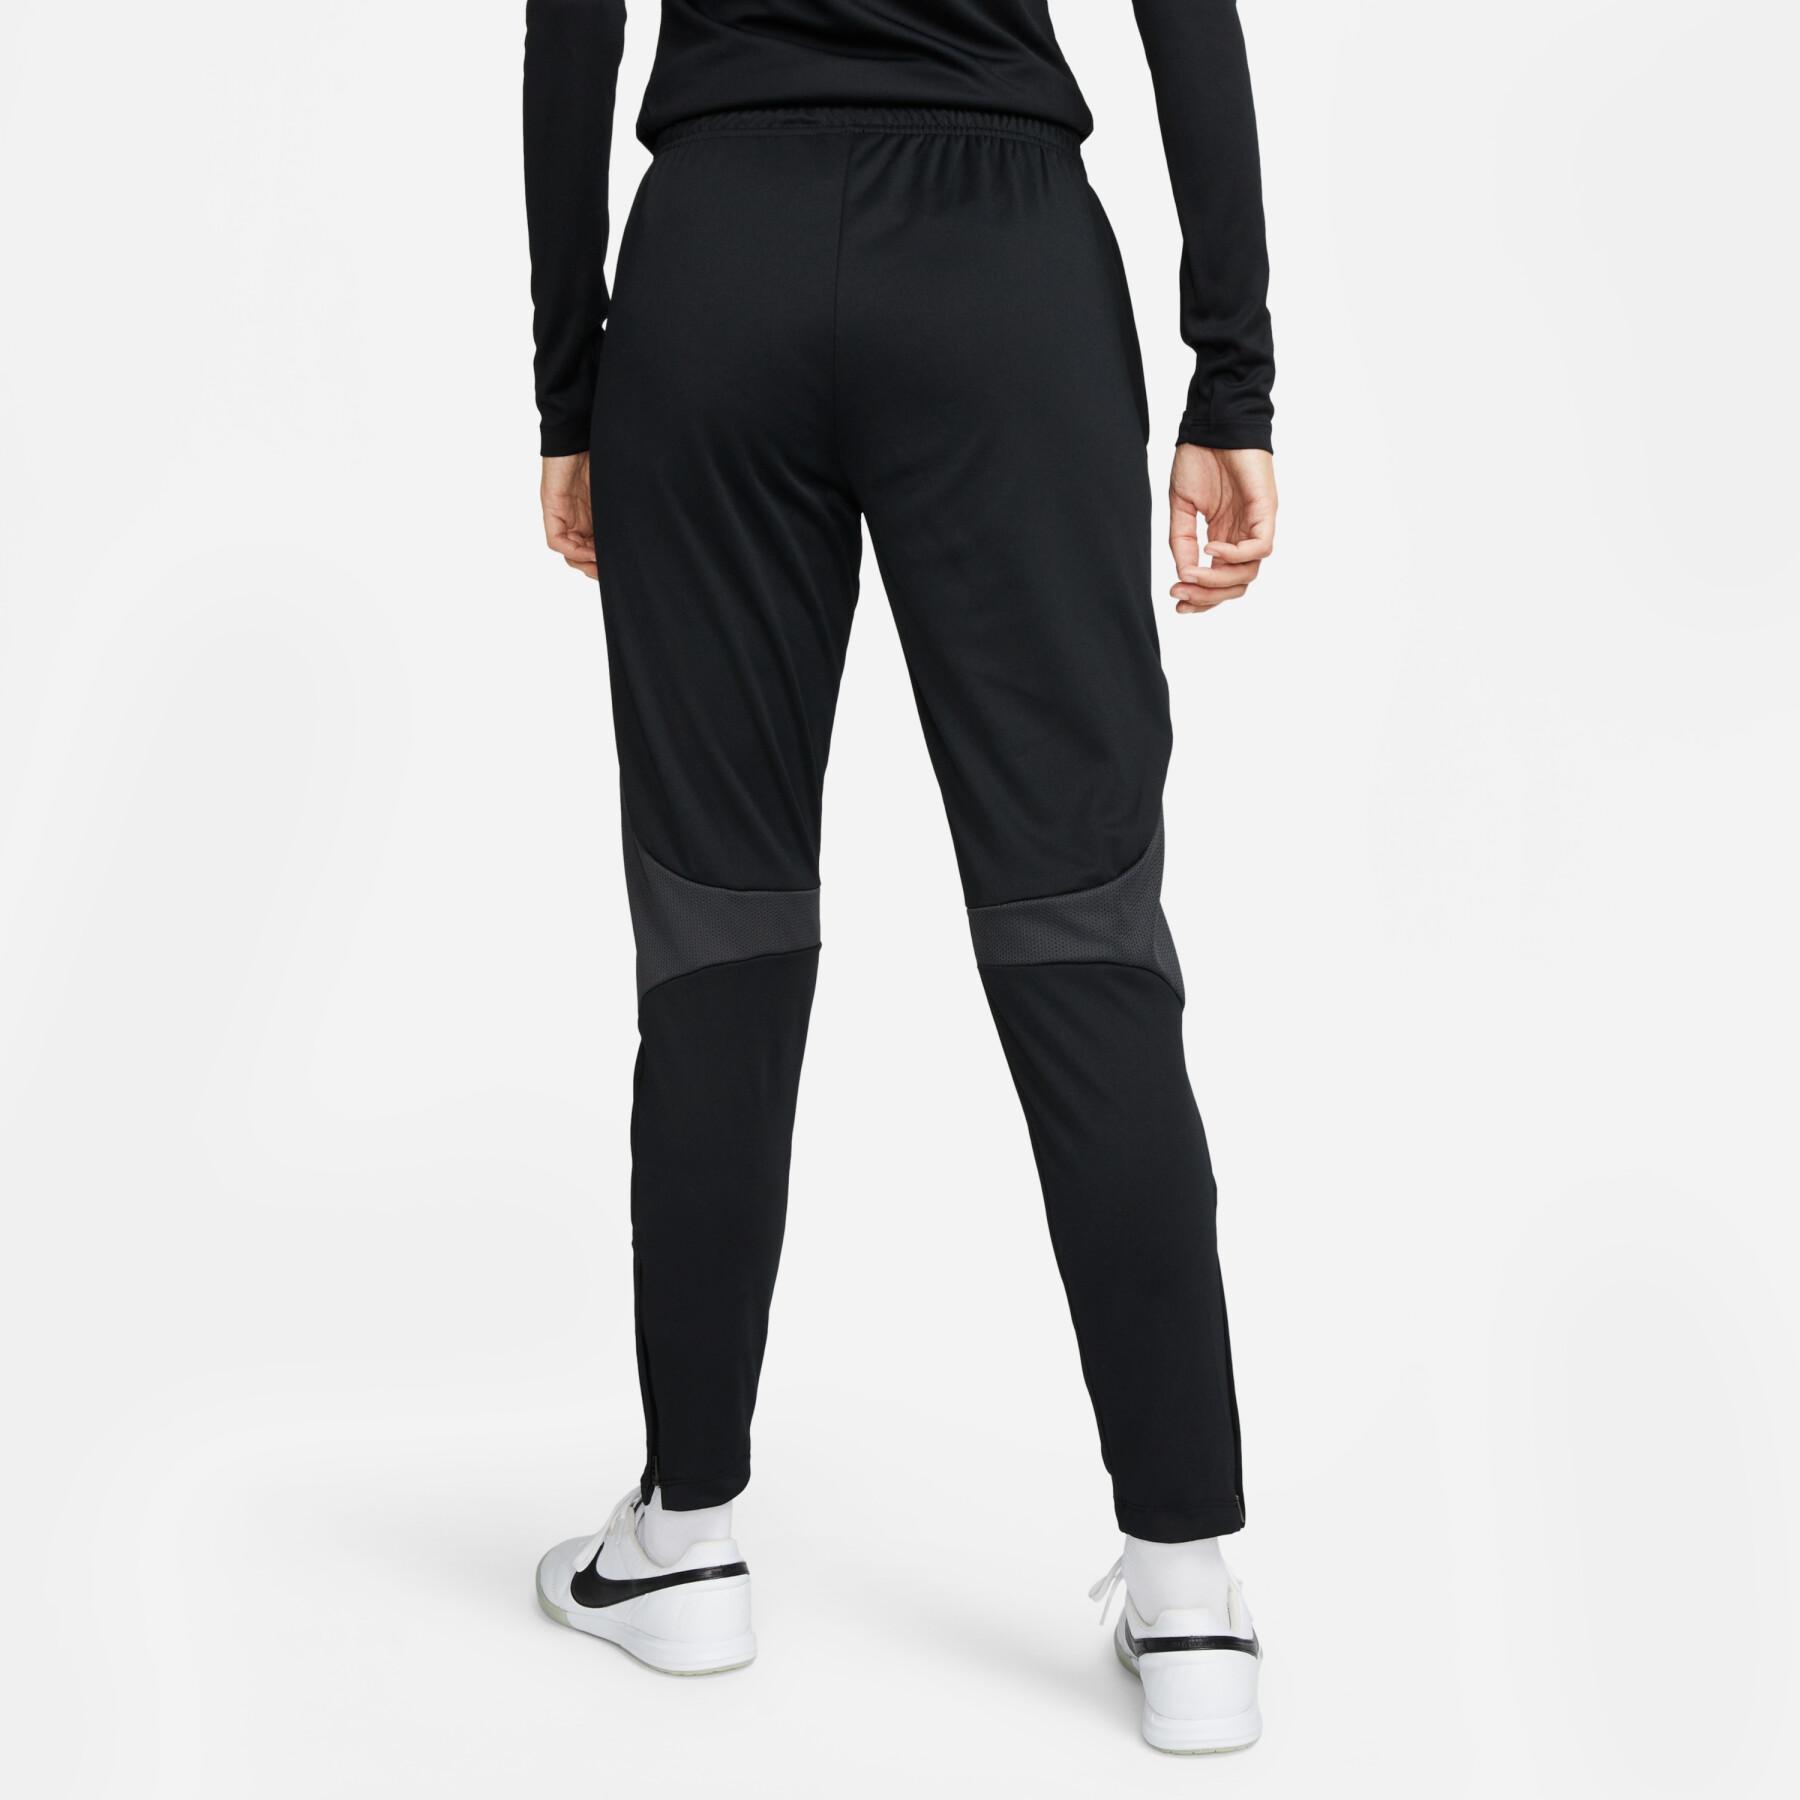 Women's Nike Academy pro Sweatpants suit 